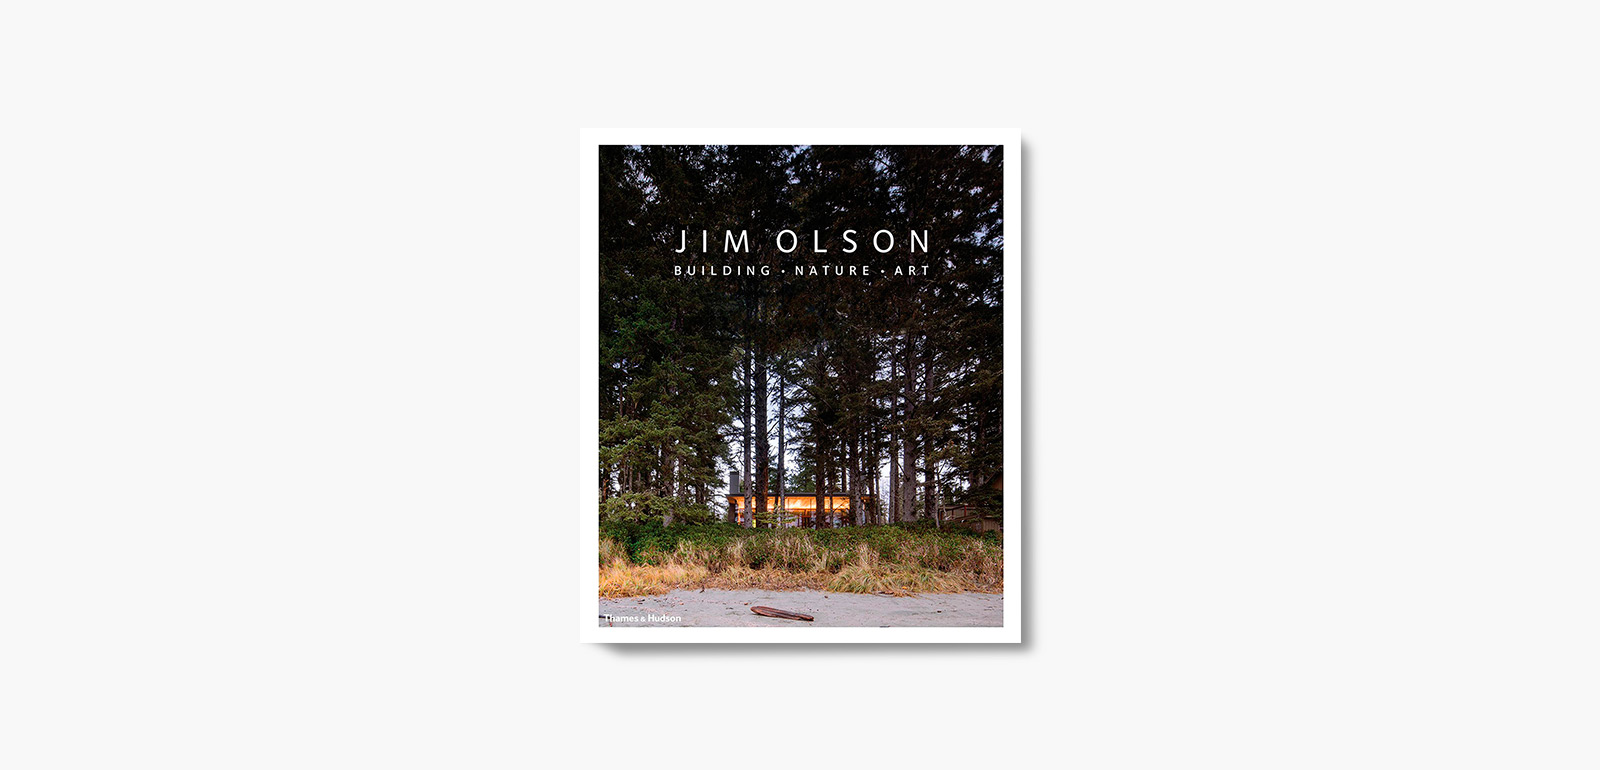 Jim Olson Building Nature Art